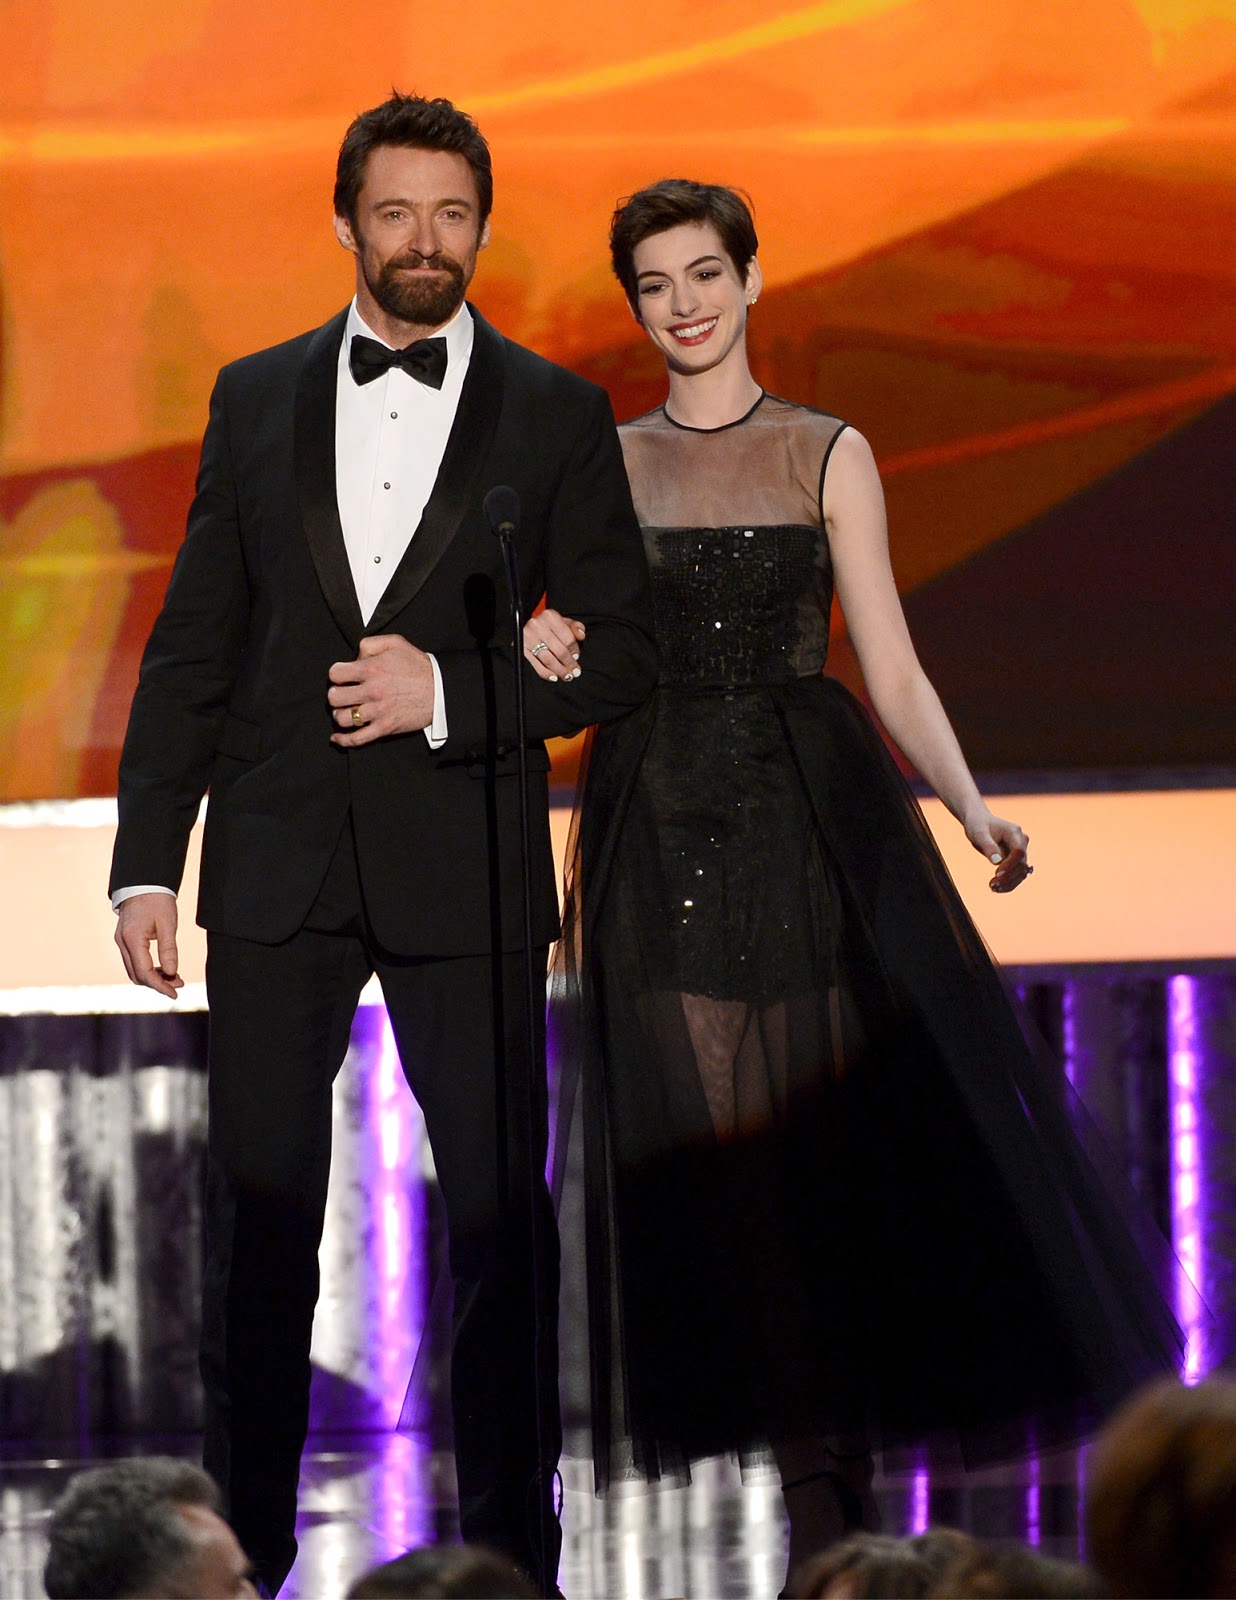 http://3.bp.blogspot.com/-IrjaiLyIltY/UQZ6Ix8Nr3I/AAAAAAABTFA/T6TDZBZGEhA/s1600/Anne_Hathaway-Hugh_Jackman-19th_Annual_Screen_Actors_Guild_Awards-1_27_2013-001.jpg